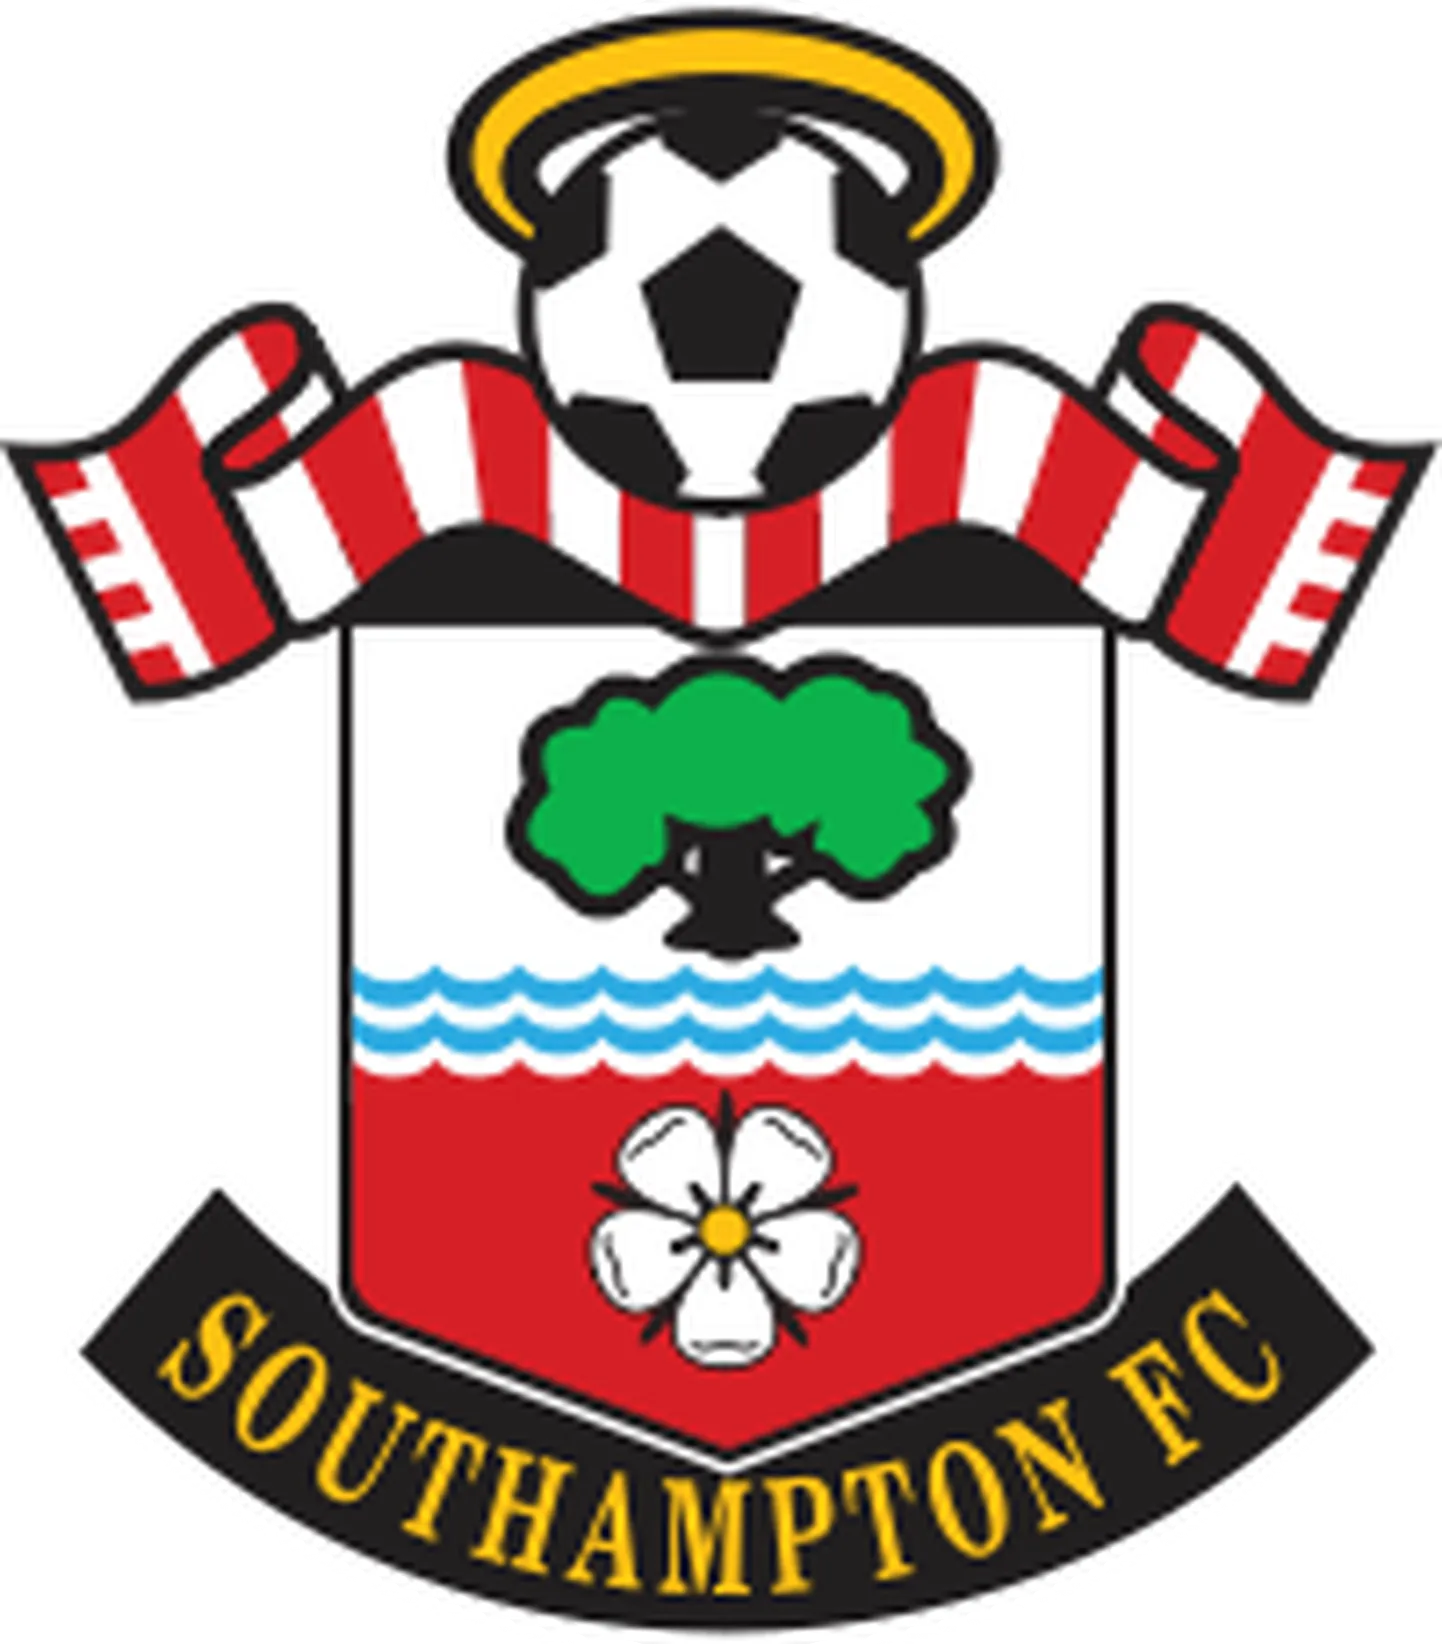 Эмблема клуба "Саутгемптон".